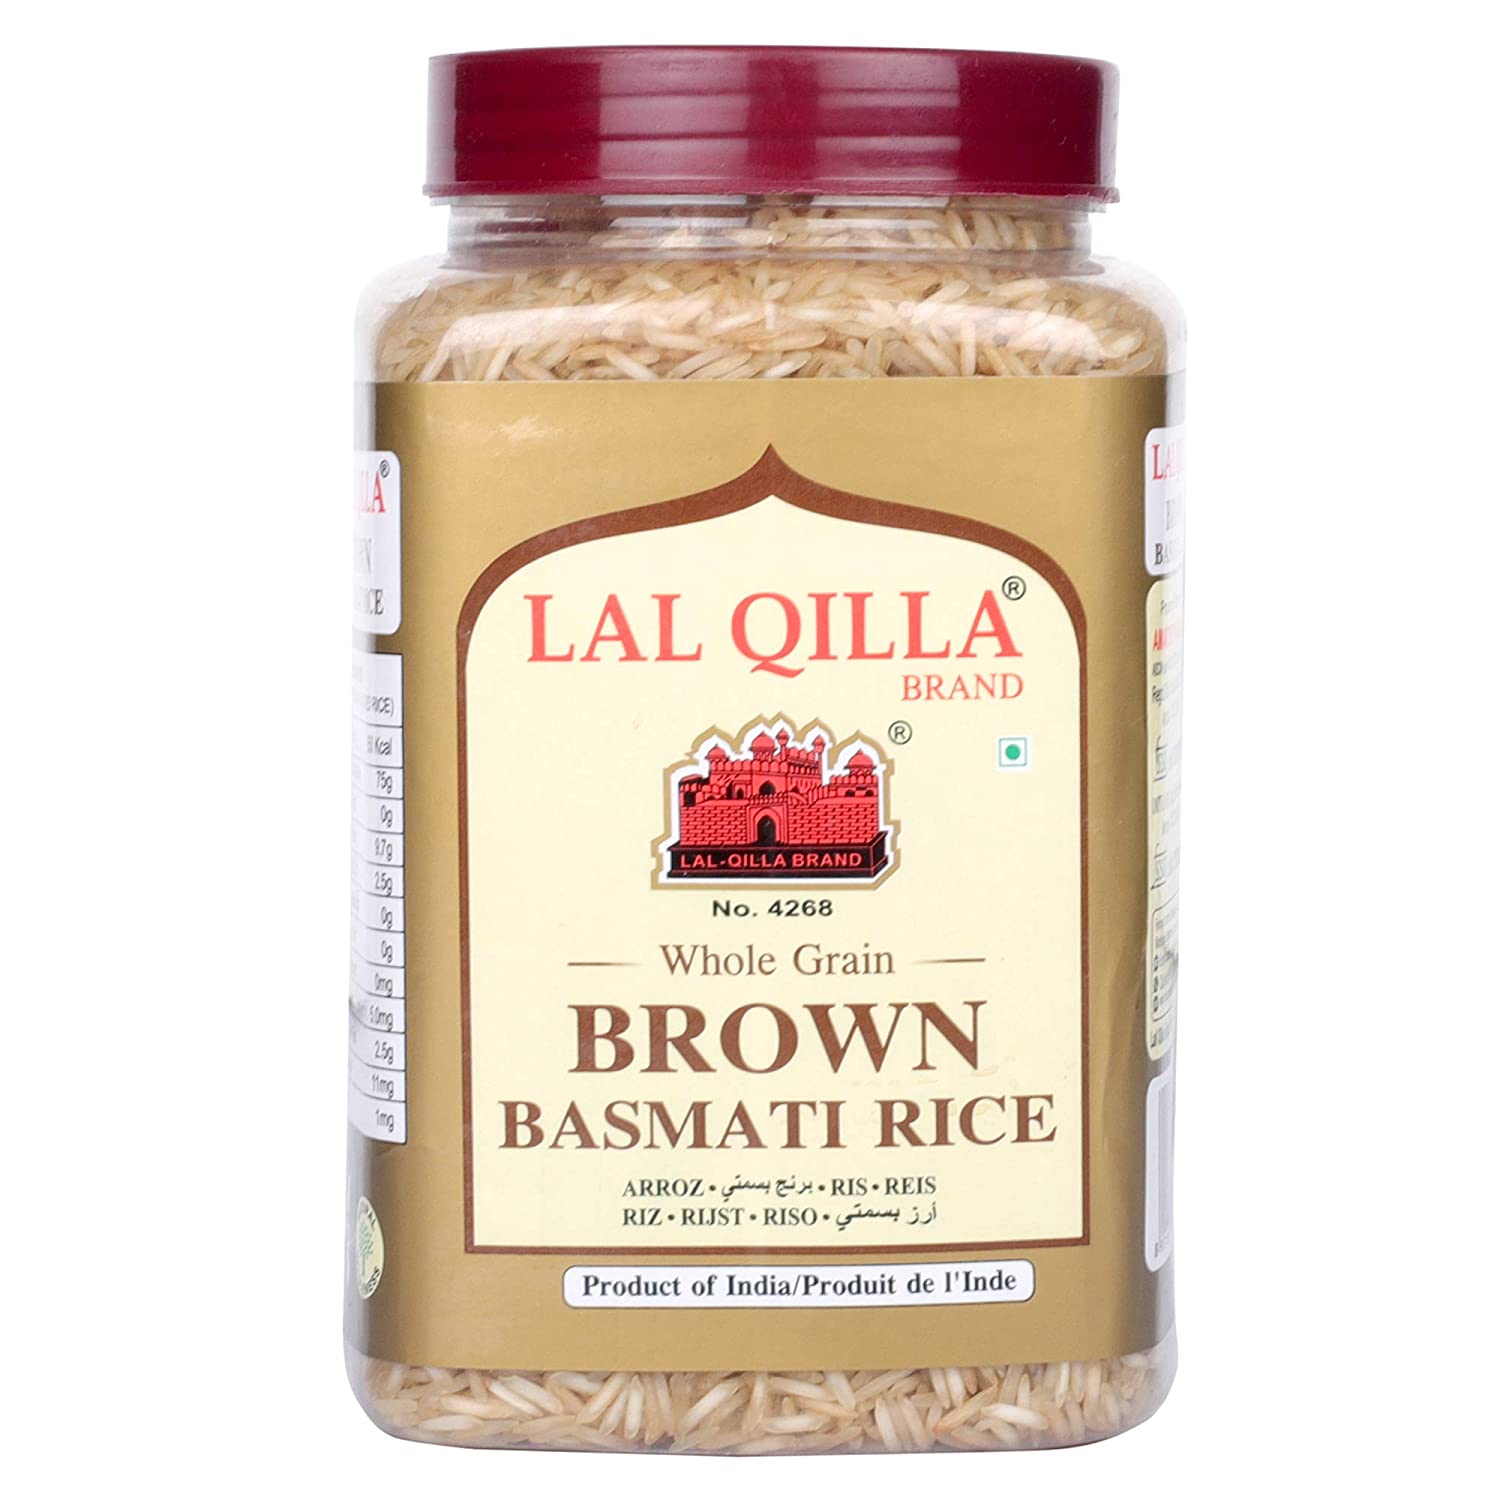 Lal Qilla Brown Basmati Rice Image